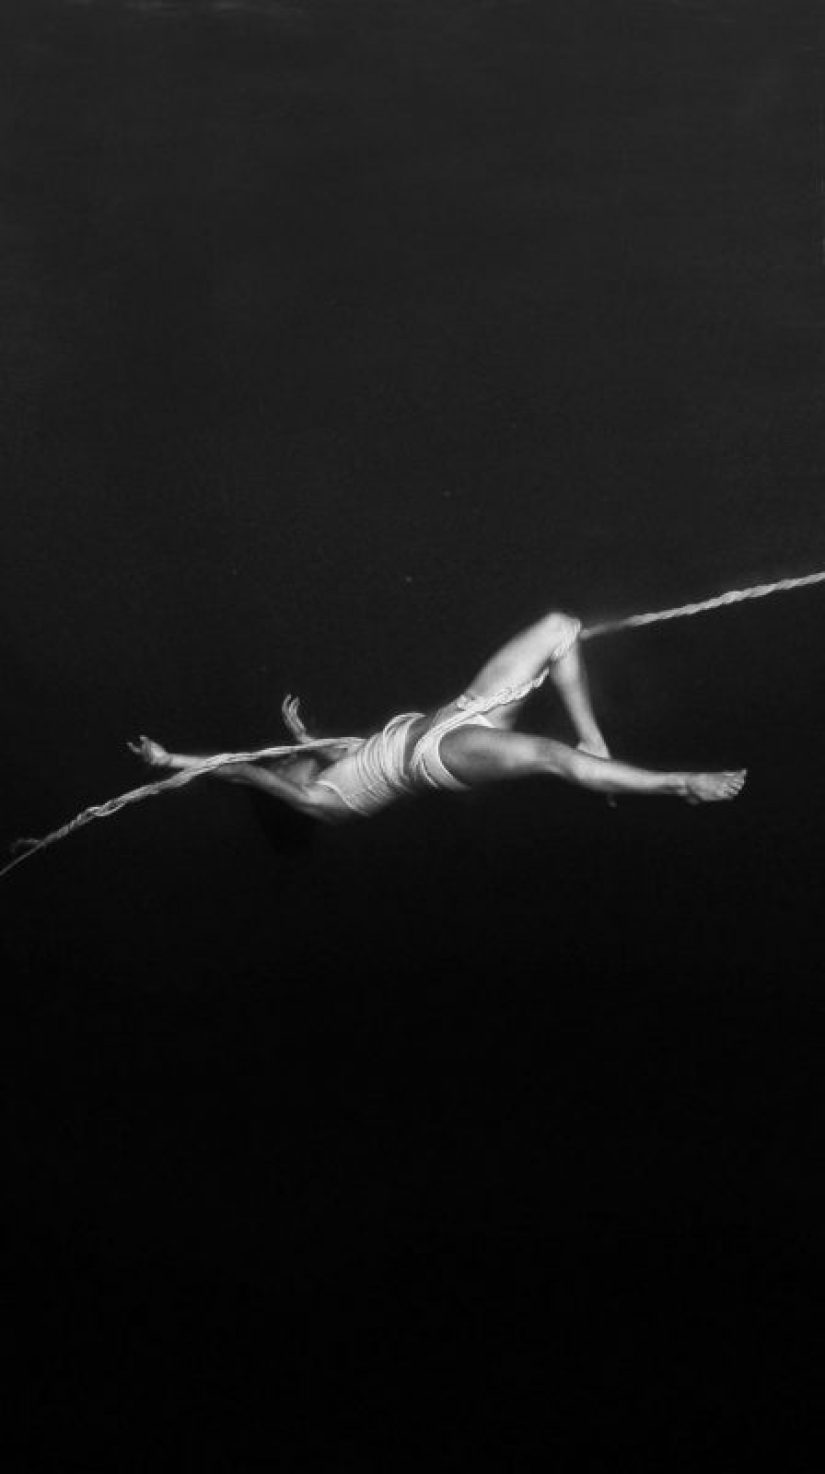 Flying under water in the wonderful photo works of Katerina Bodrunova